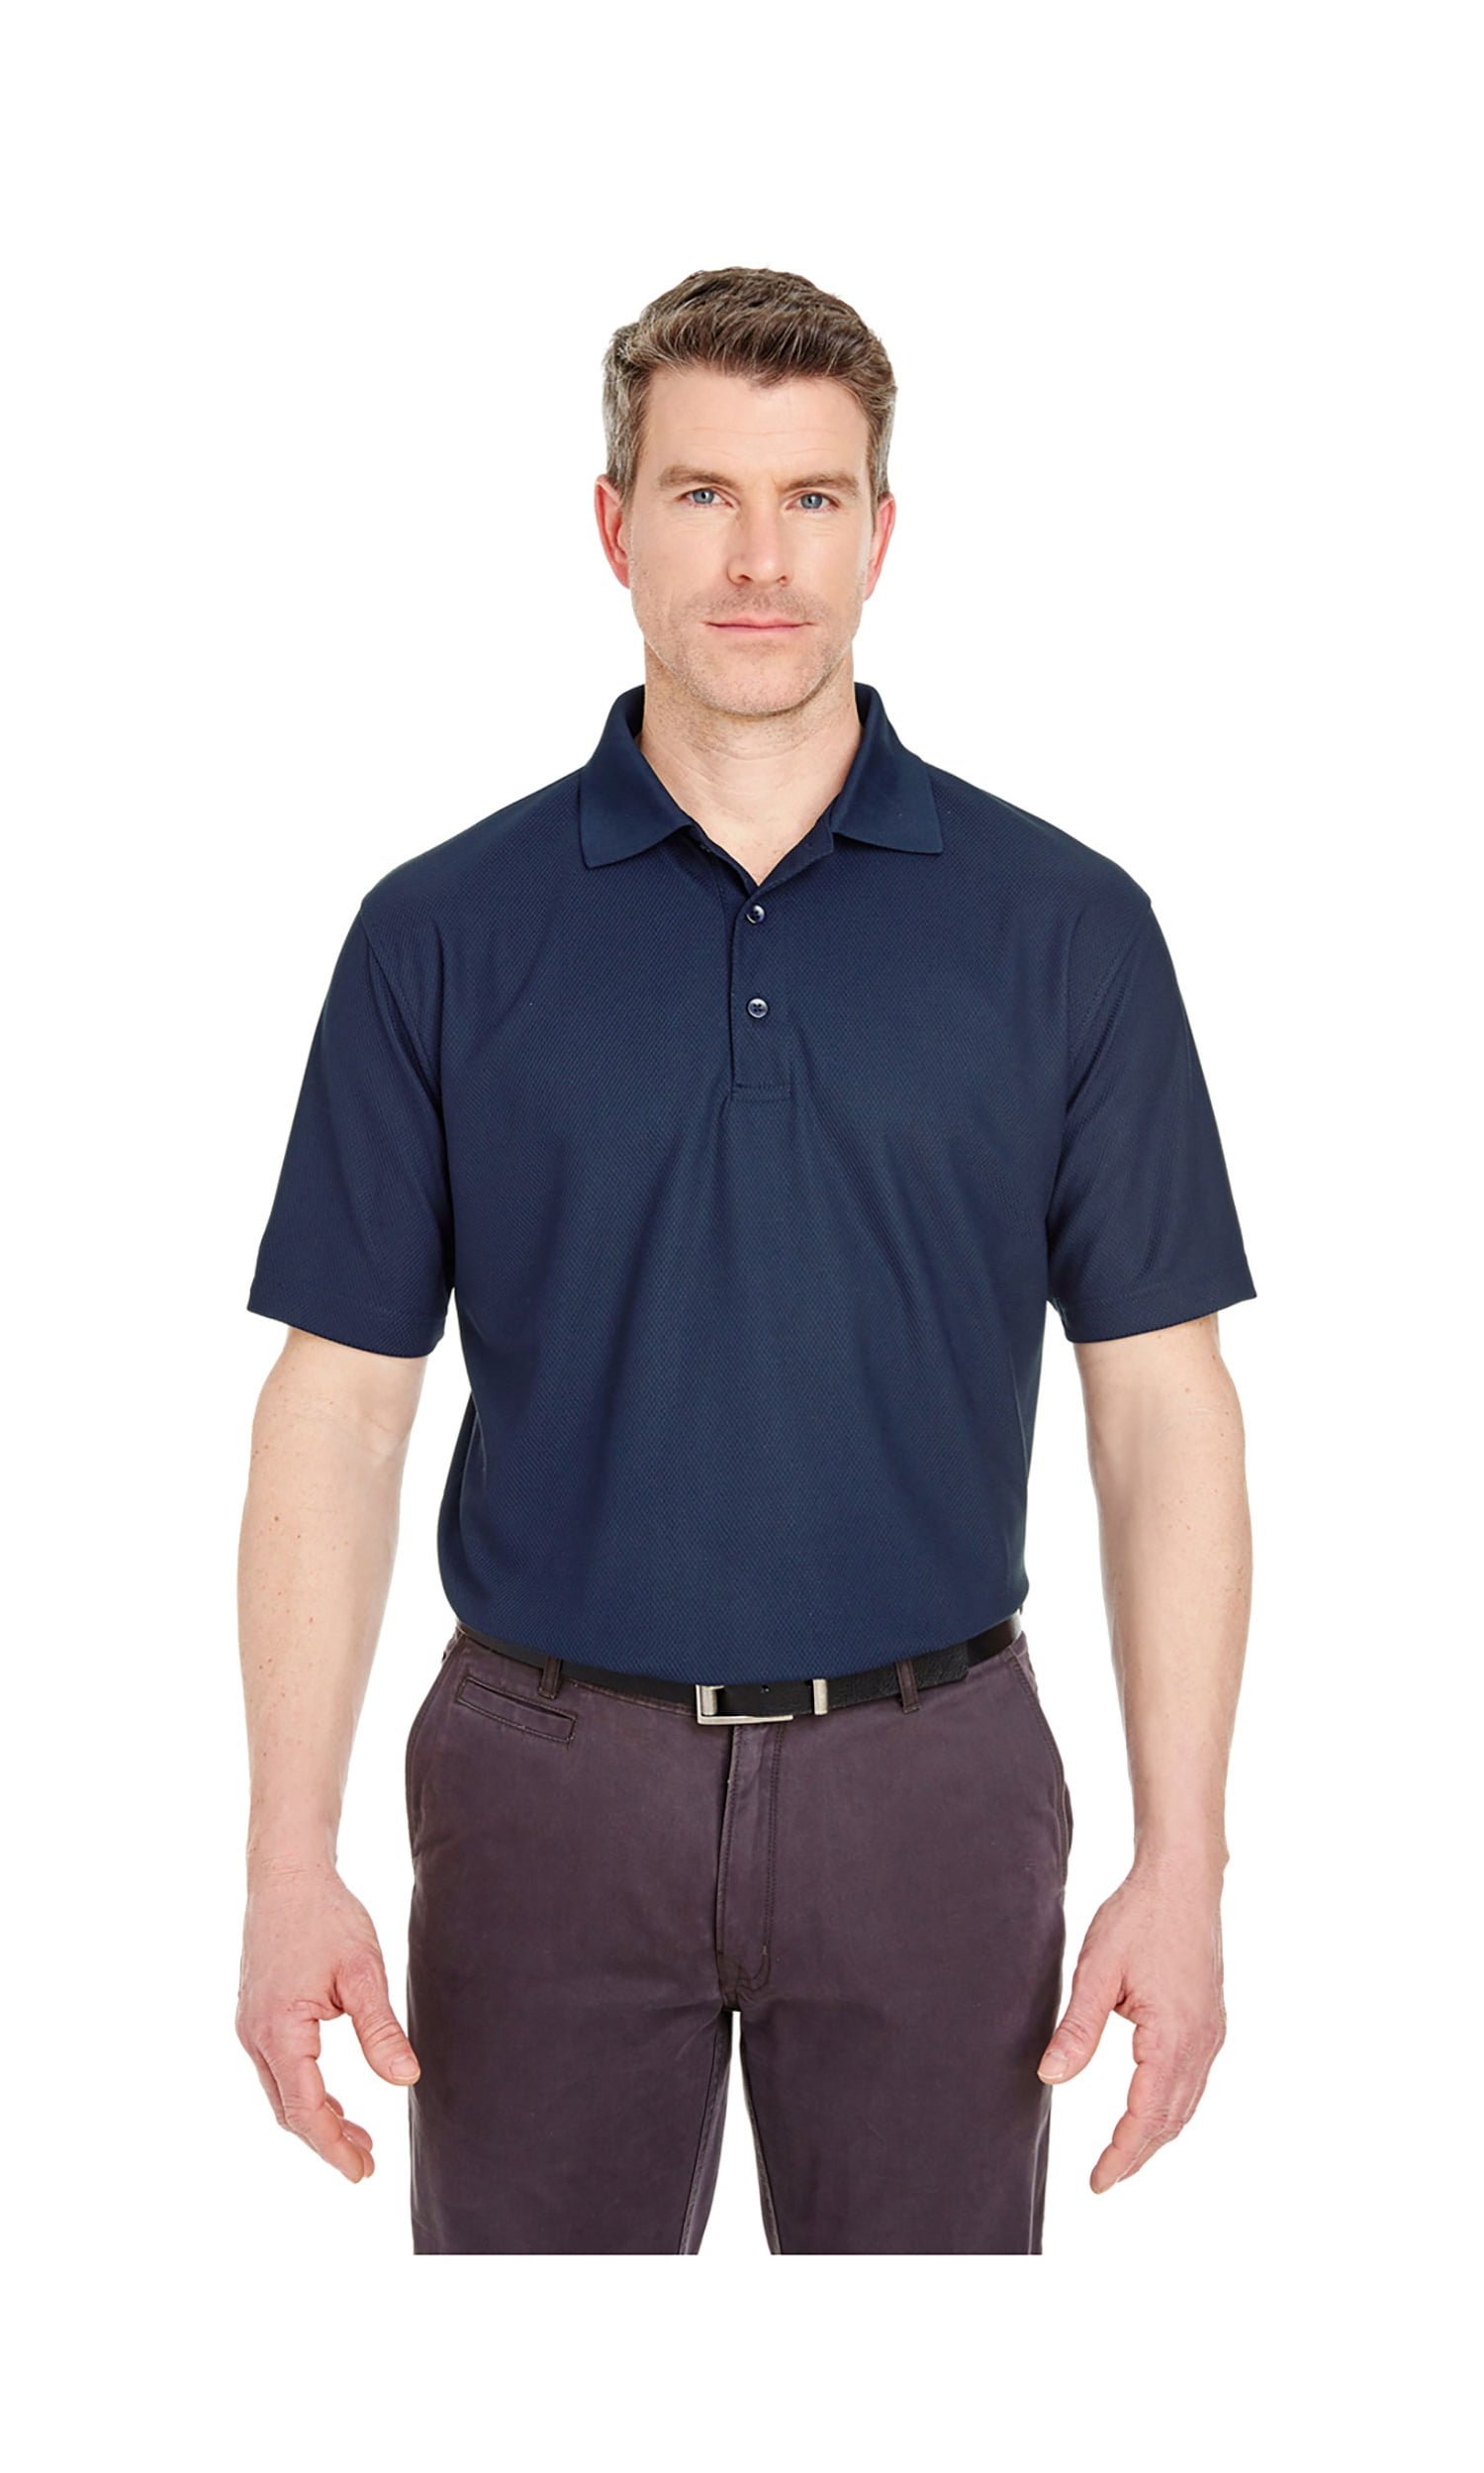 UltraClub Men's Cool & Dry Pebble-Knit Polo Shirt, Style 8240 - Walmart.com